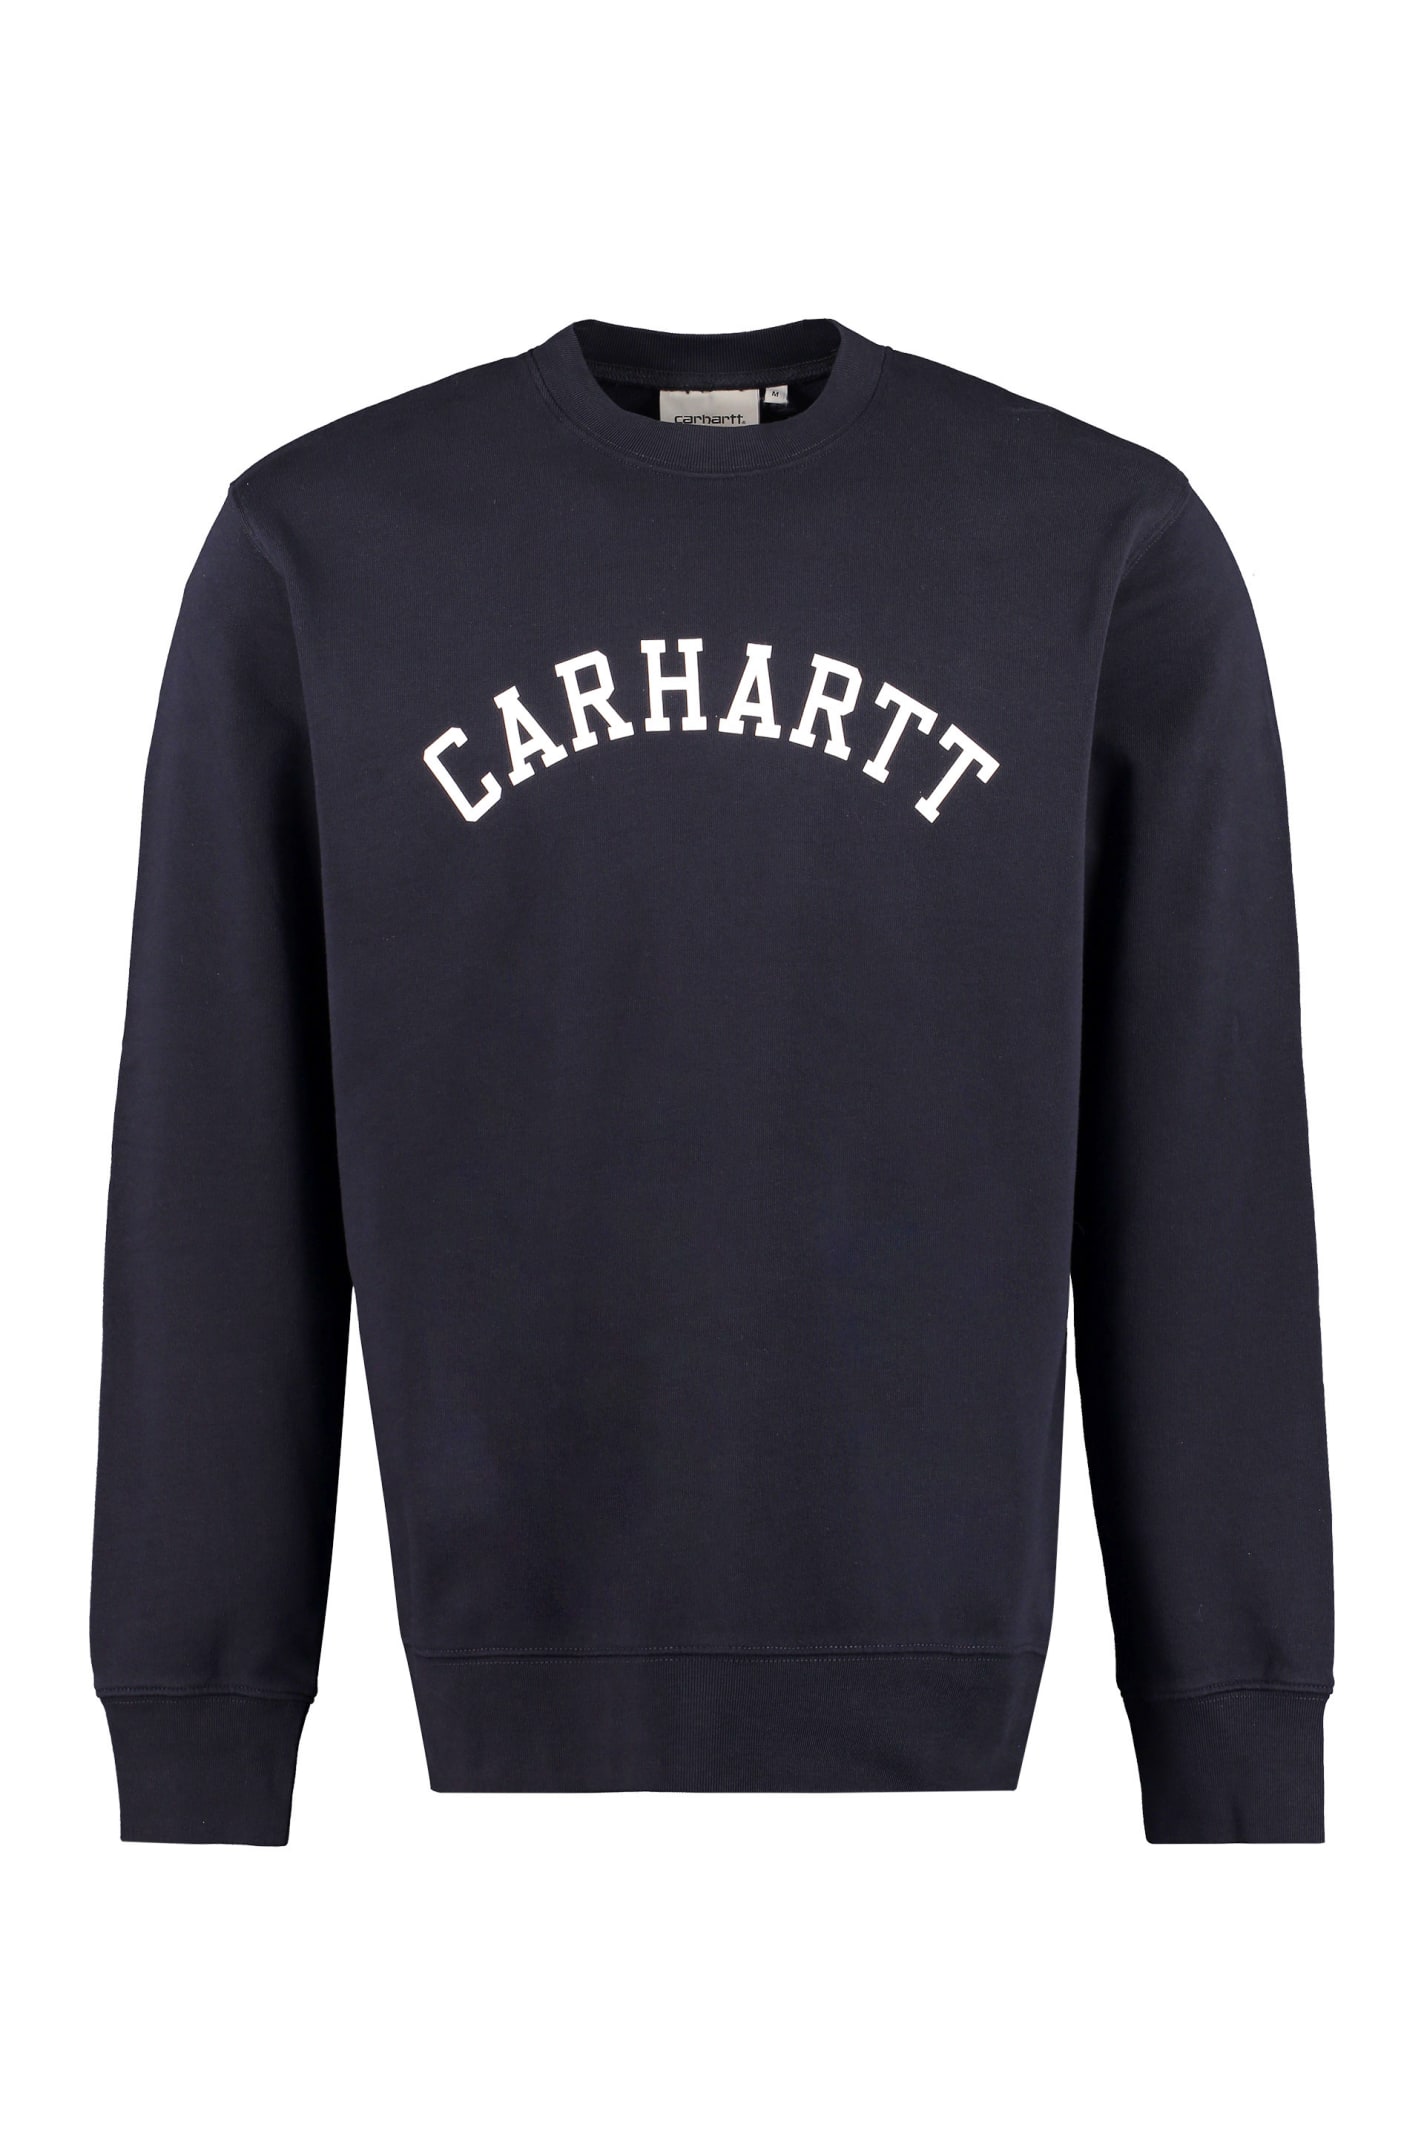 Carhartt Logo Detail Cotton Sweatshirt